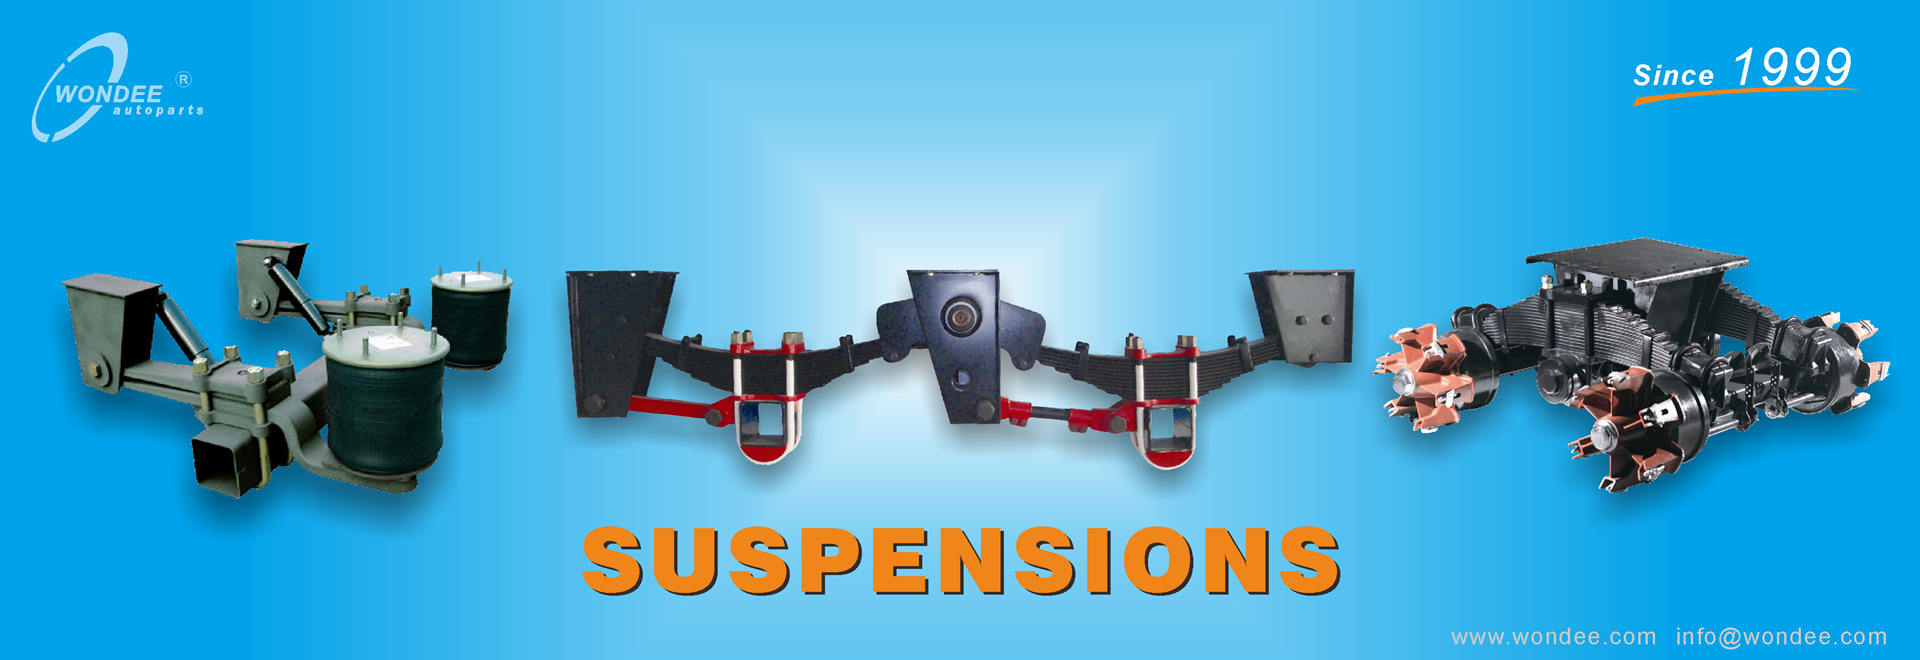 Wondee suspensions